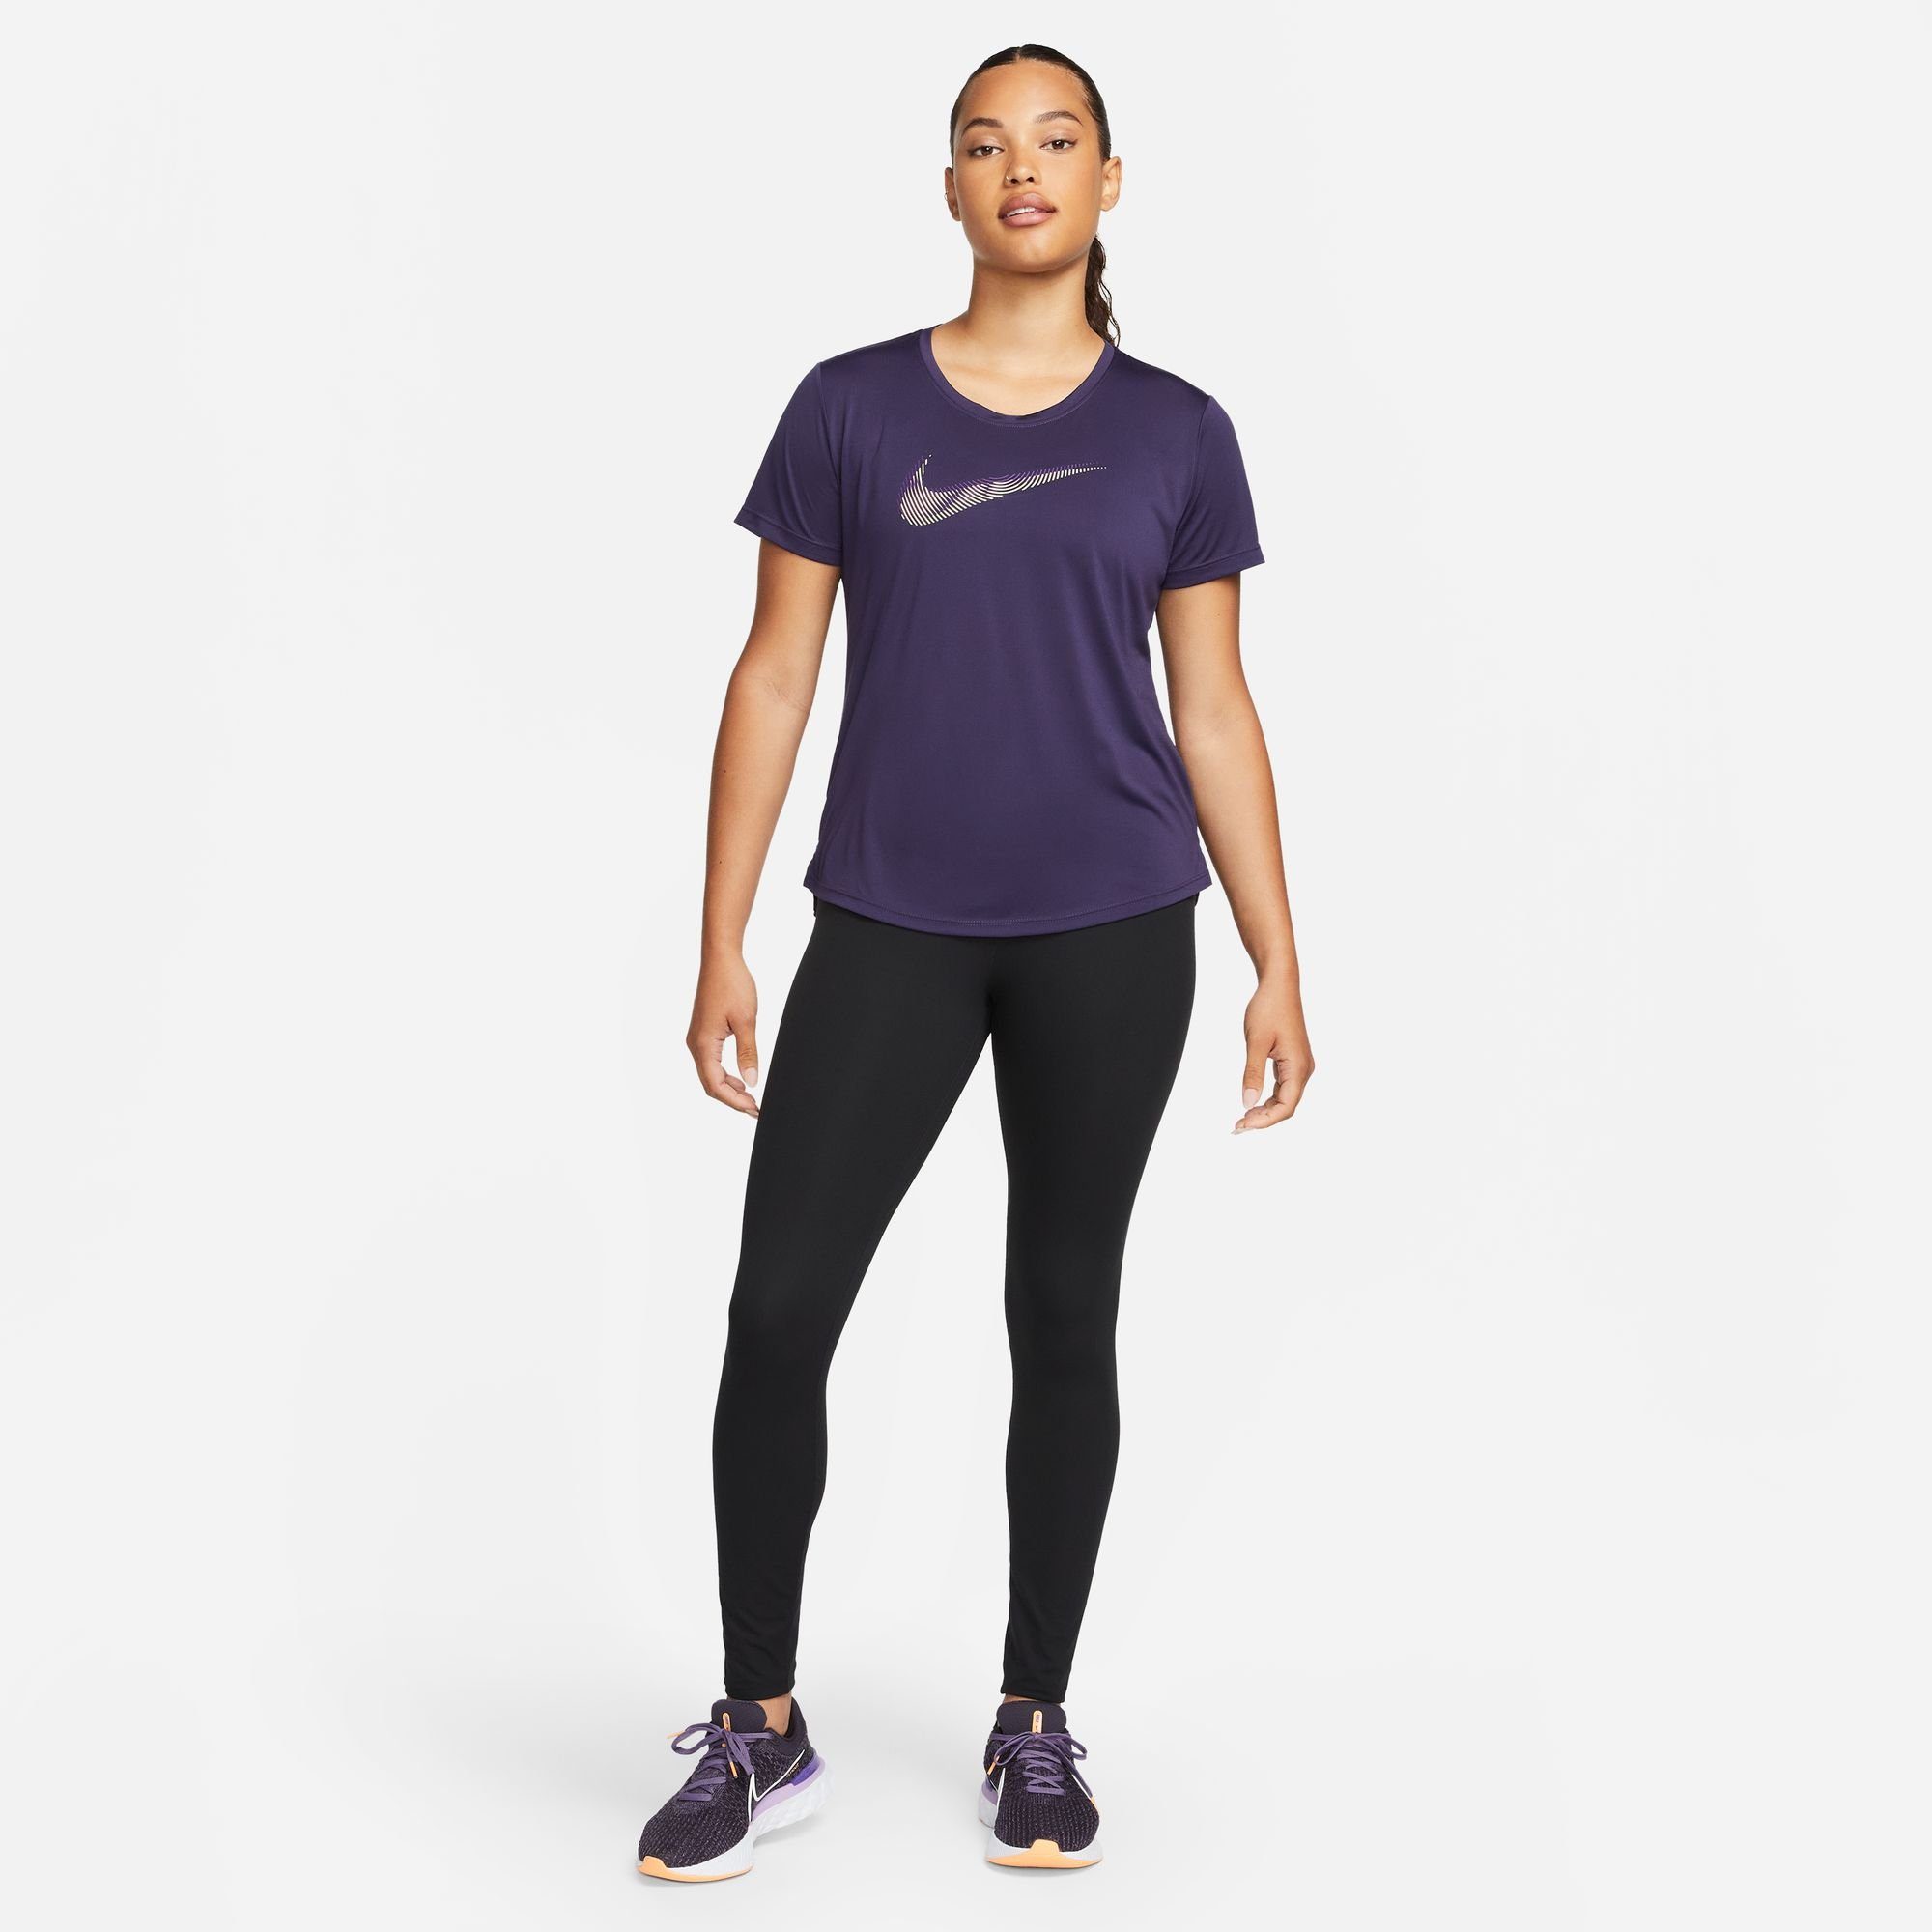 SWOOSH DRI-FIT RUNNING SHORT-SLEEVE Laufshirt PURPLE Nike PURPLE TOP WOMEN'S INK/DISCO